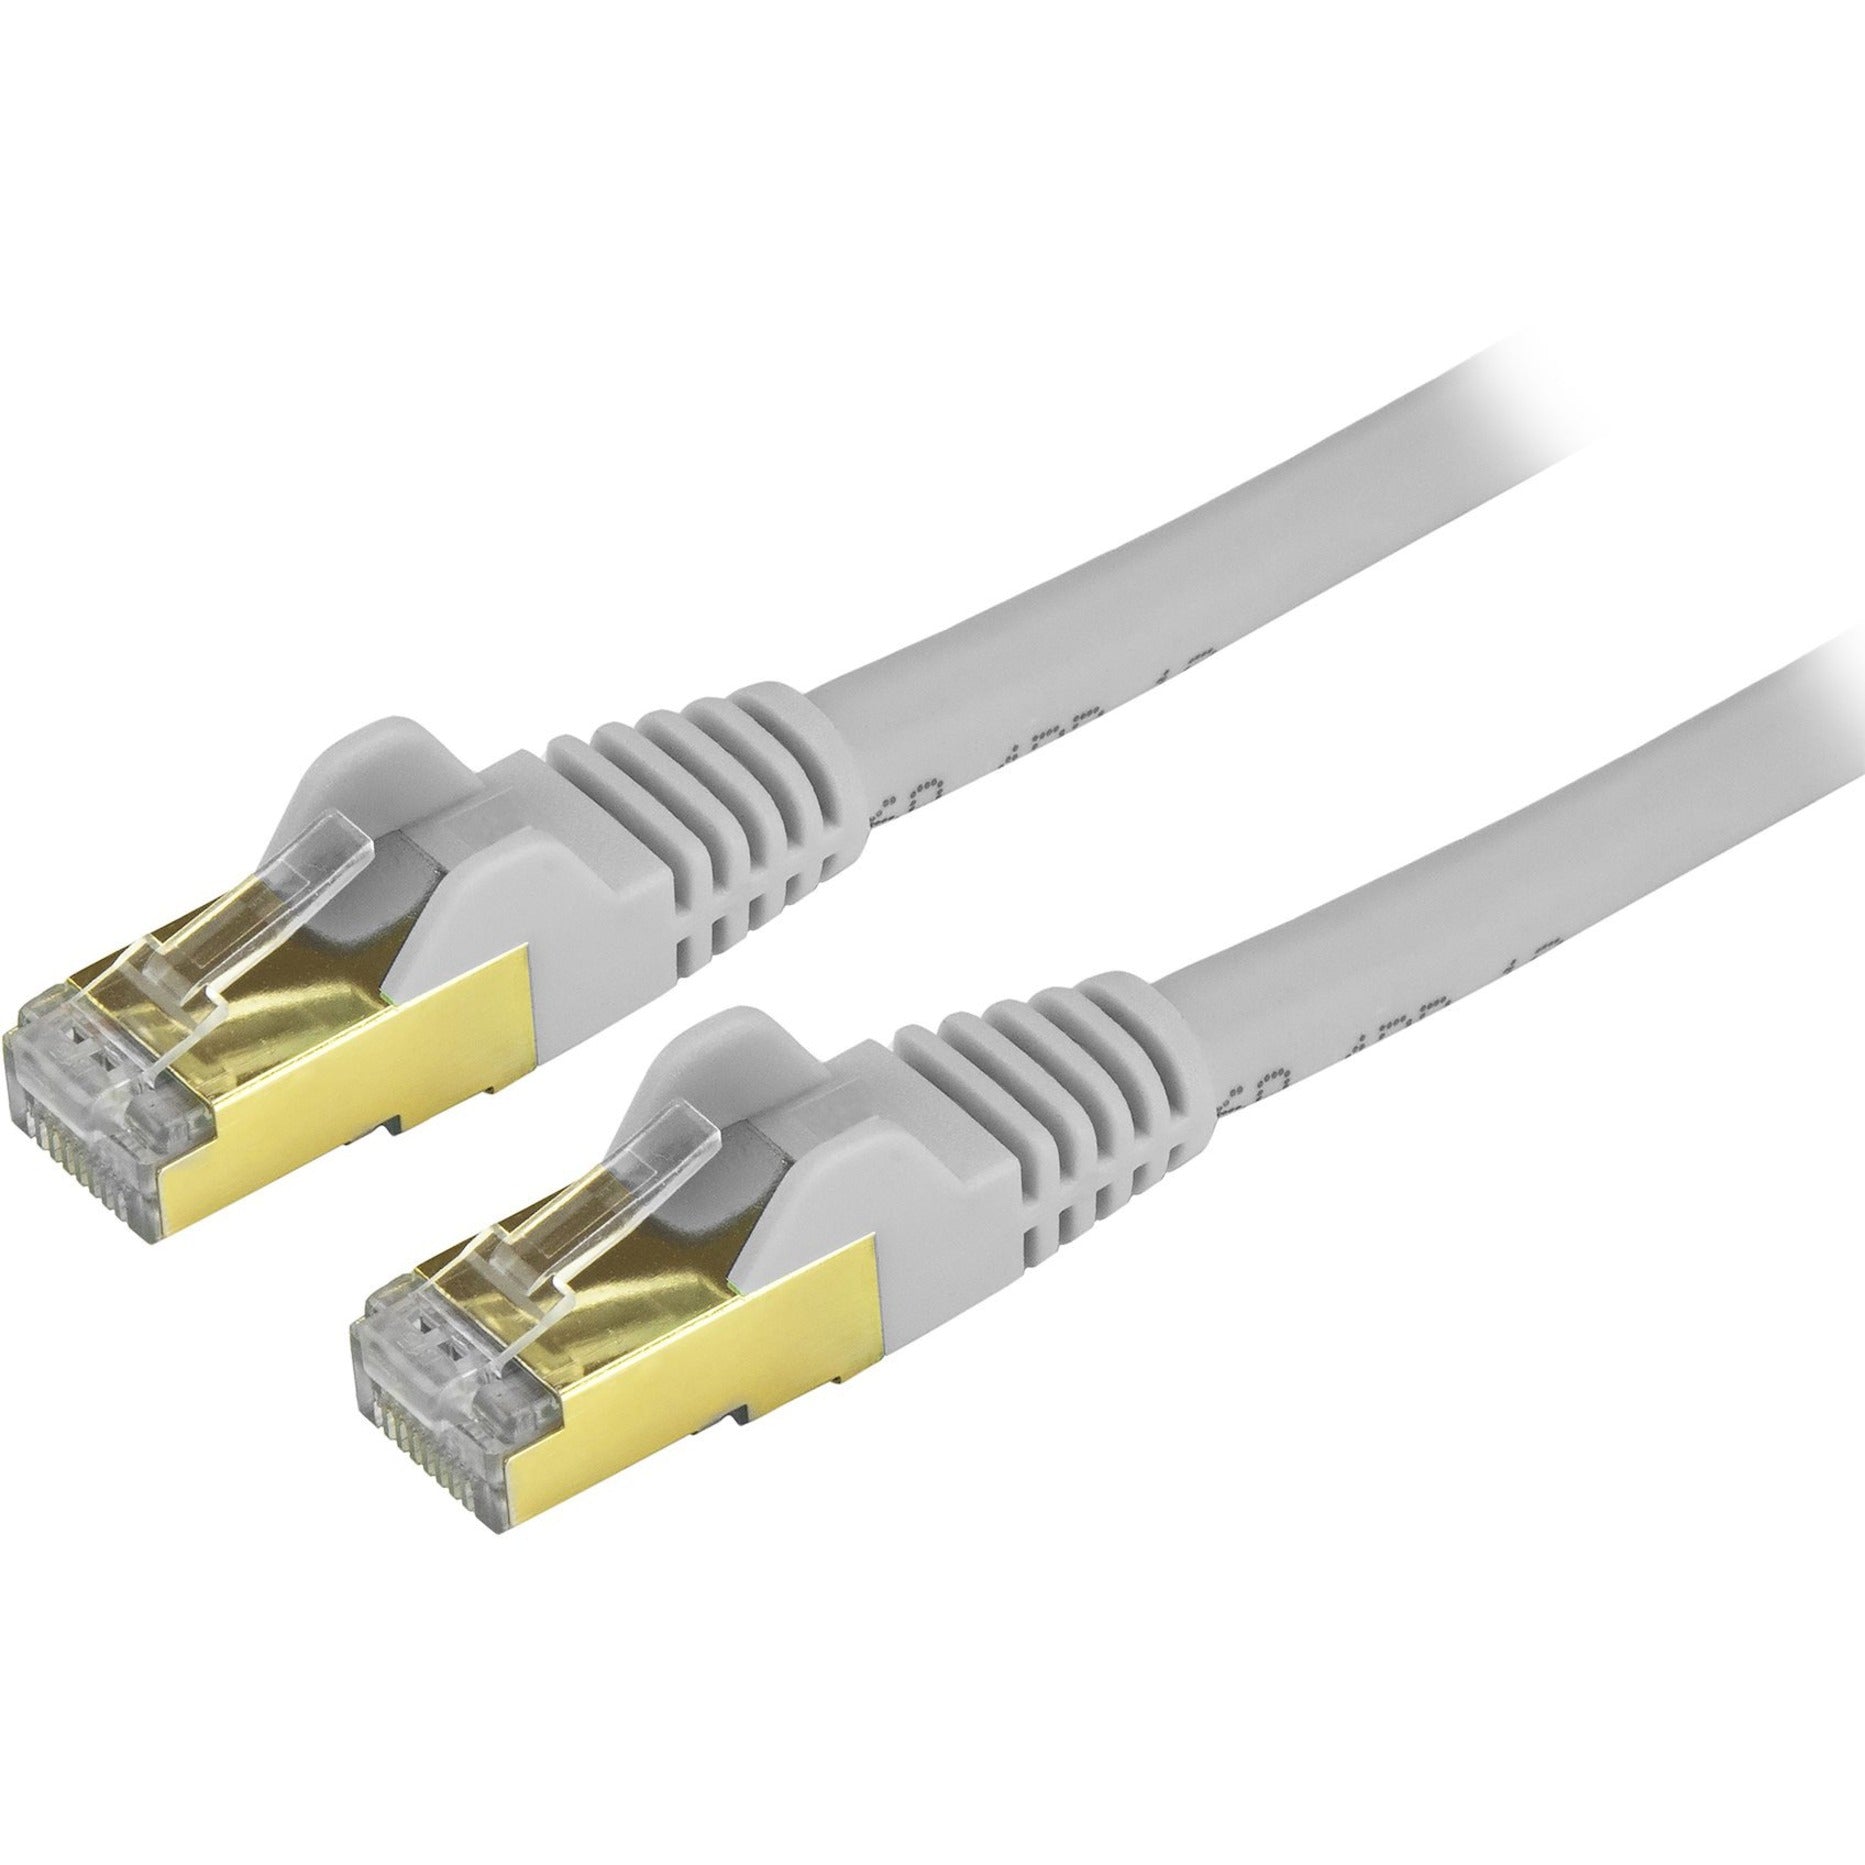 StarTech.com C6ASPAT6INGR Cat6a Ethernet Patch Cable - Shielded (STP) - 6 in., Gray, Short Ethernet Cord